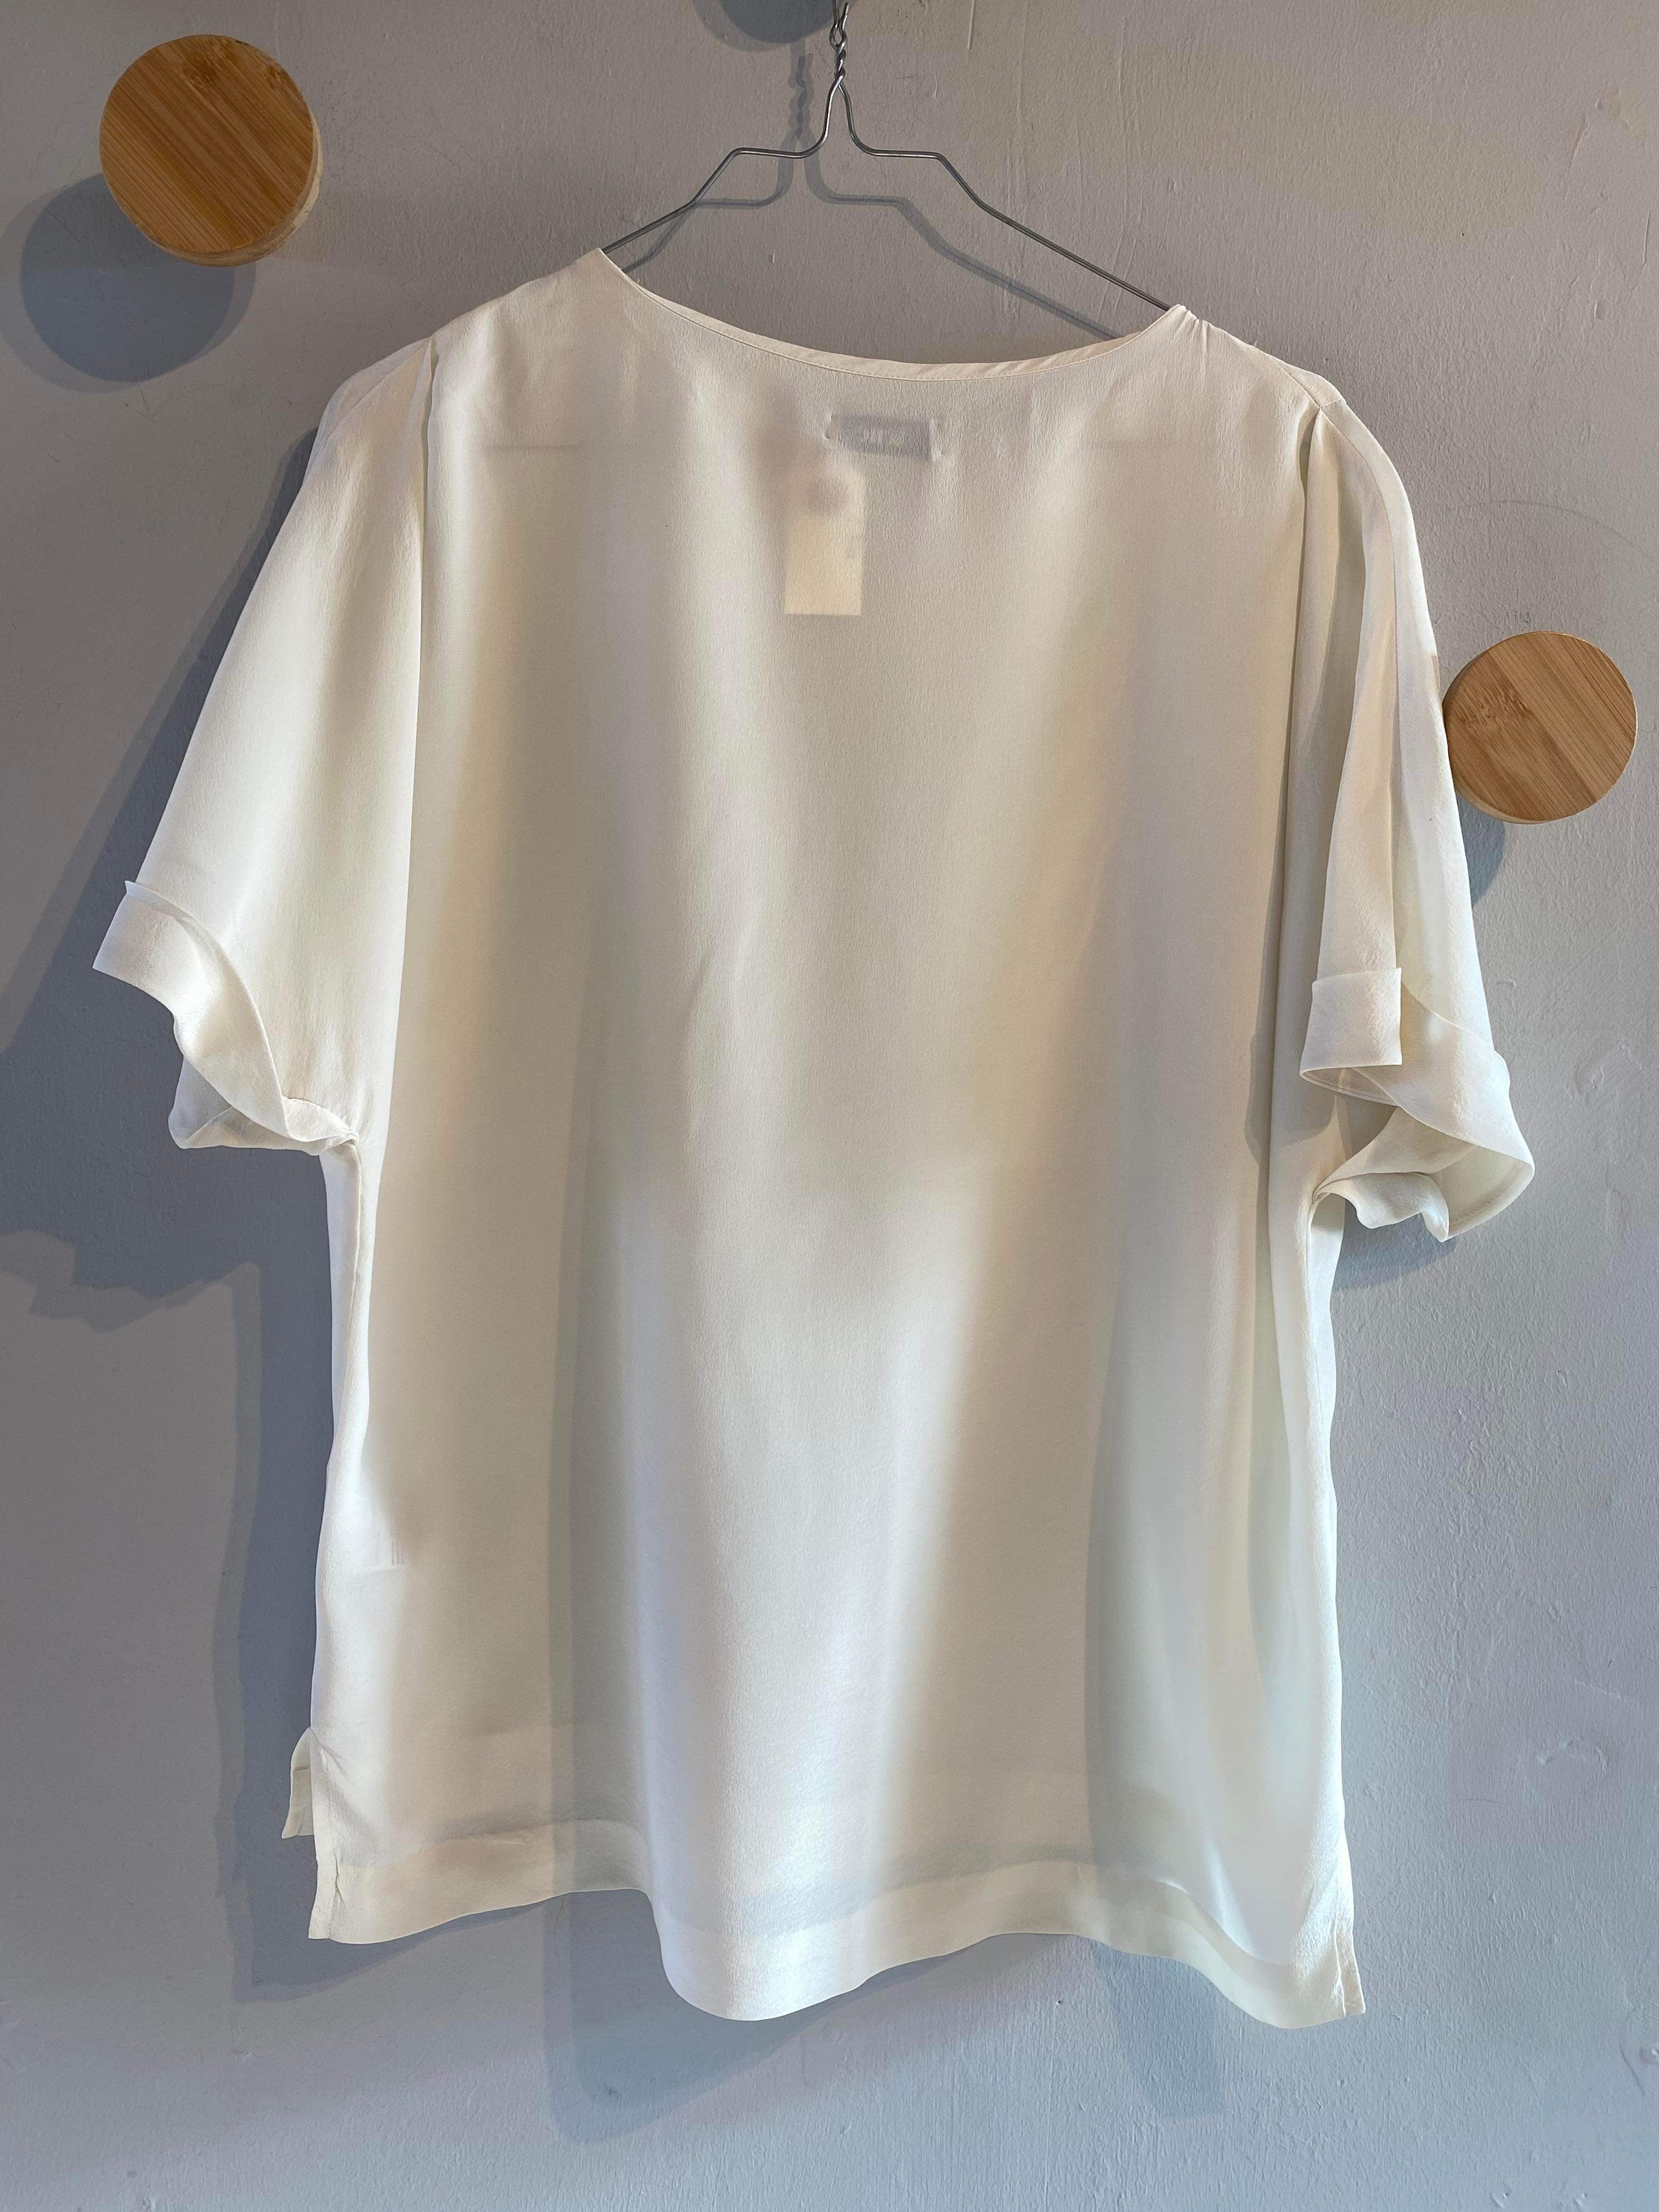 Acne - T-shirt - Size: M